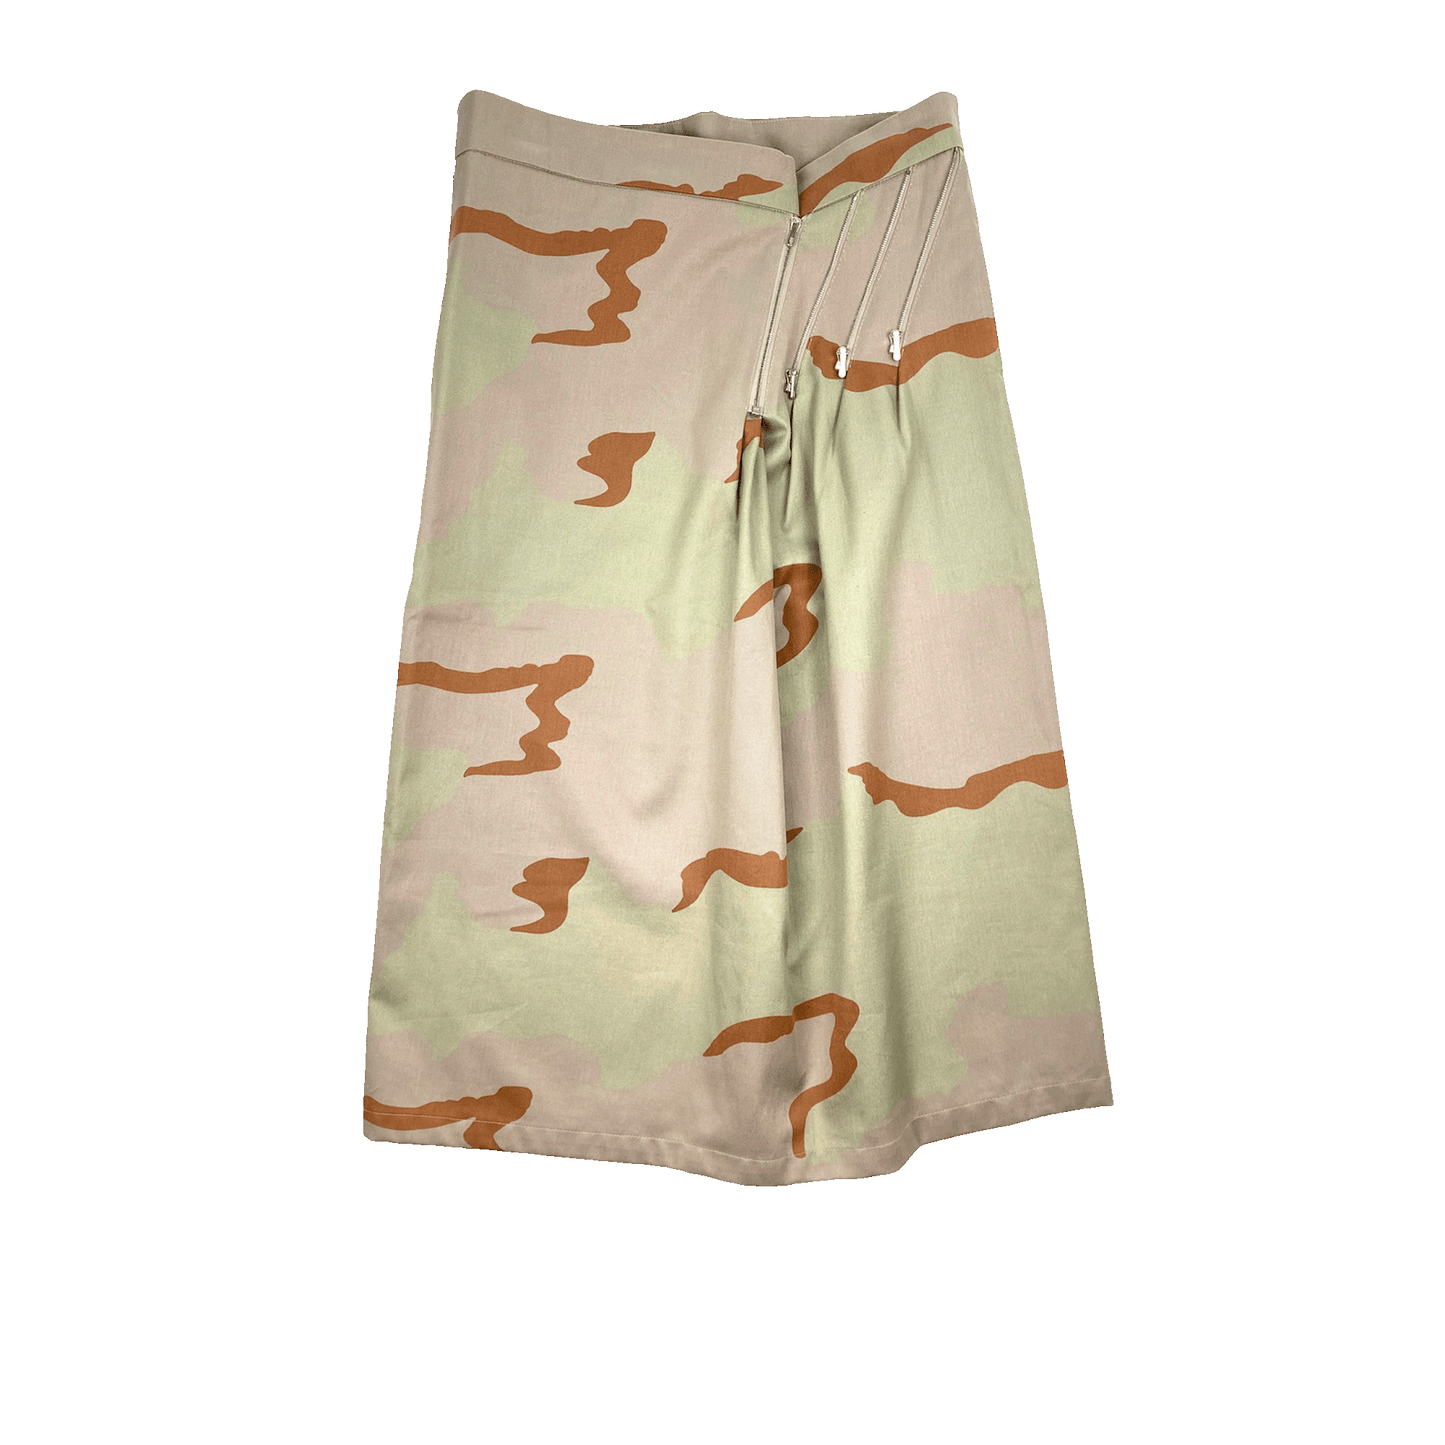 Nº67 SMLXL Skirt Camouflage